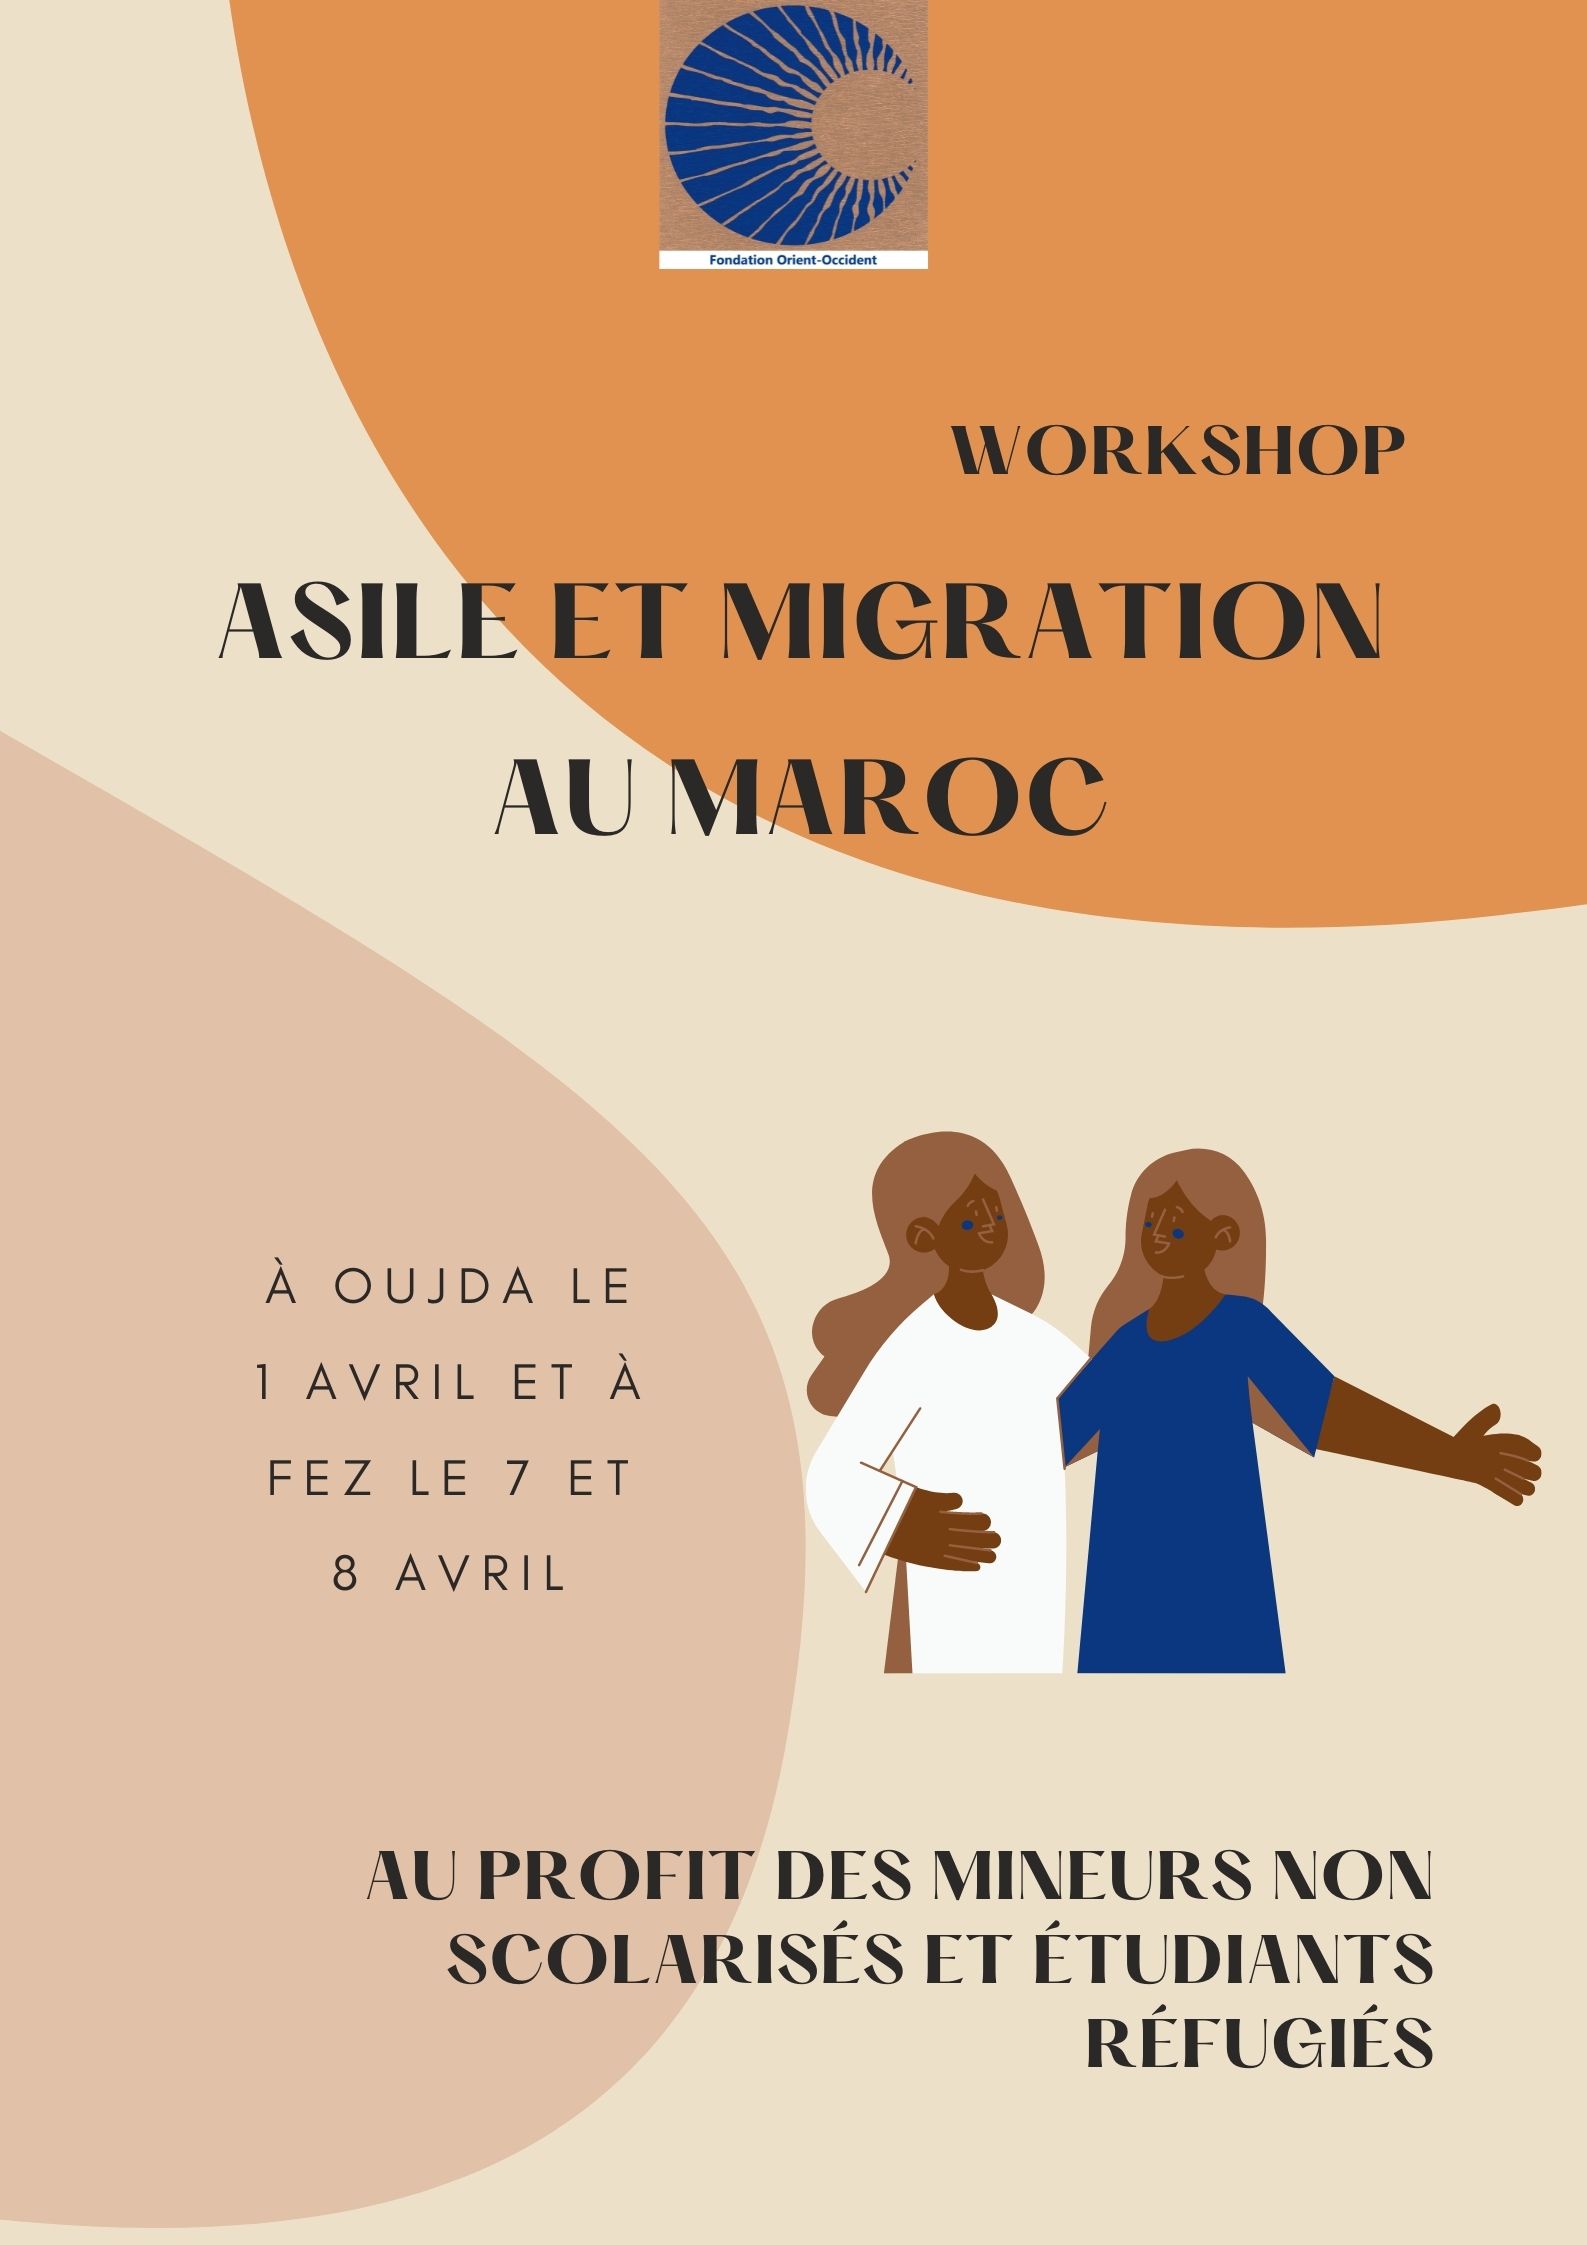 Workshop on asylum and migration 2